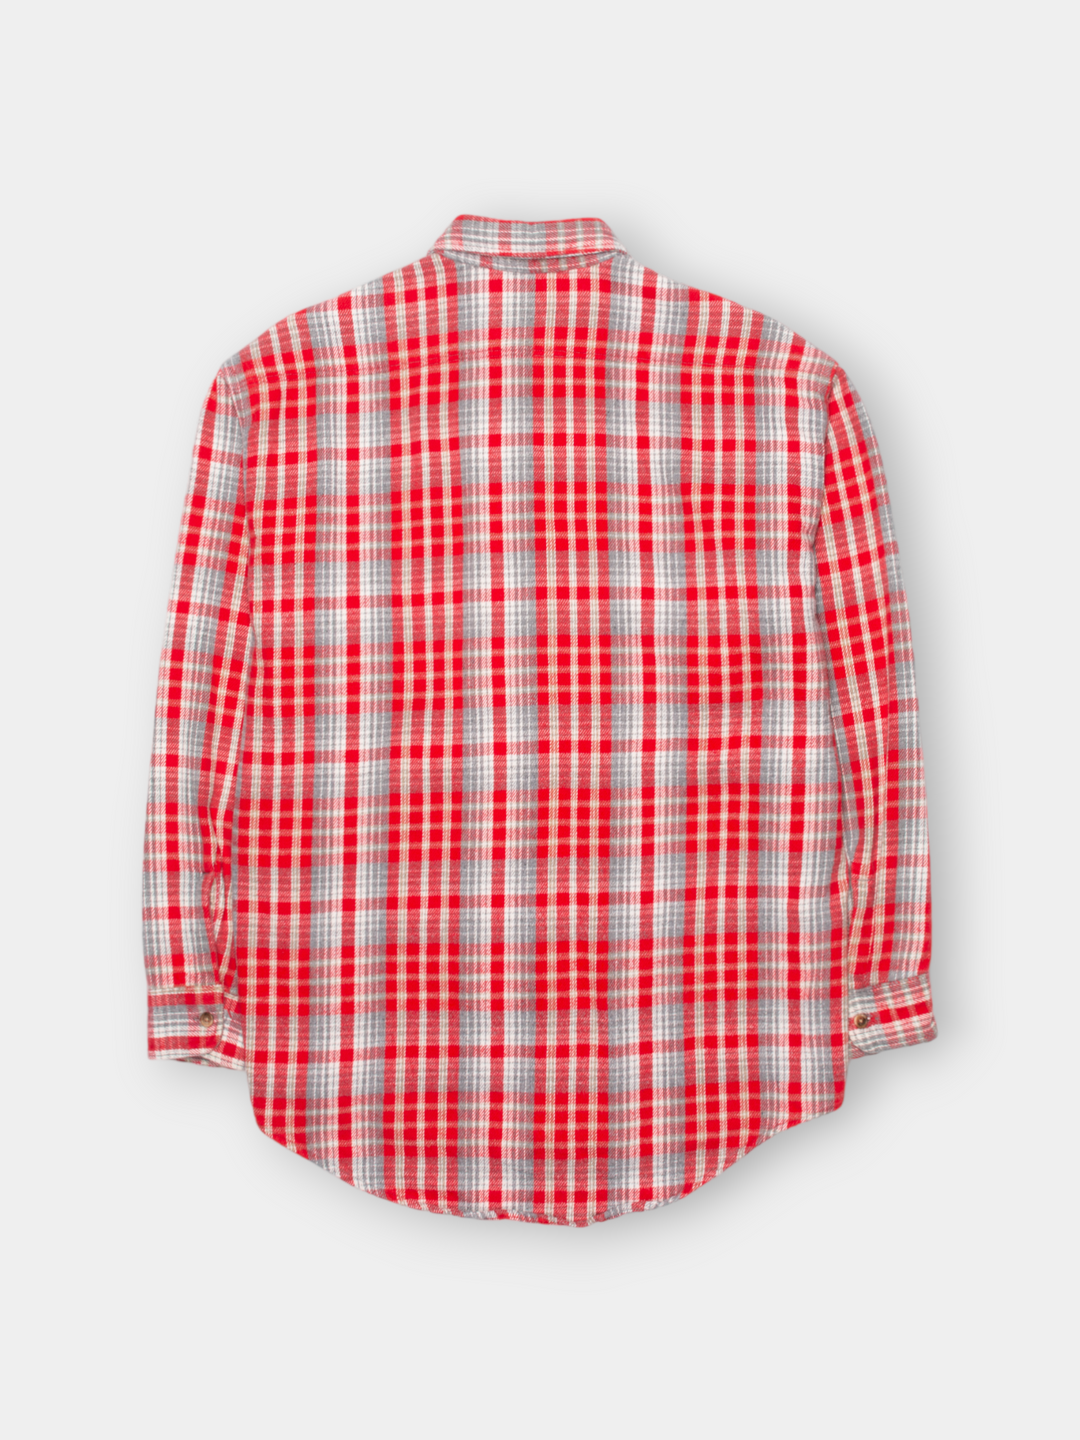 Vintage St Johns Bay Flannel Shirt (XL)